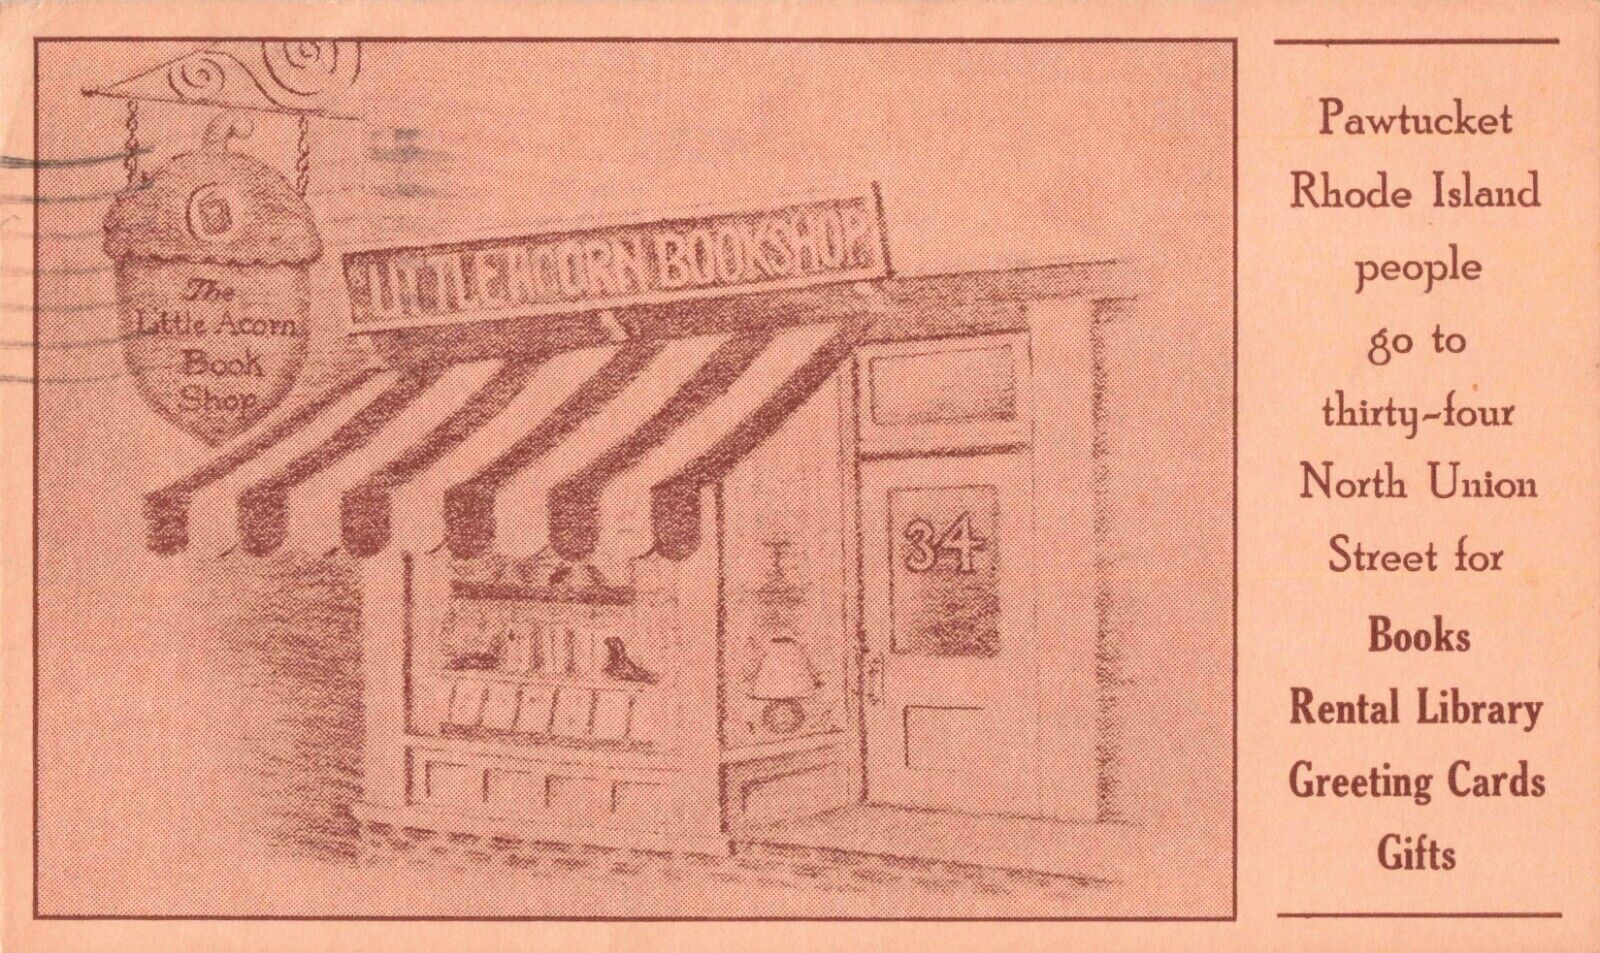 The Little Acorn Book Shop Pawtucket Rhode Island RI 1938 Postcard